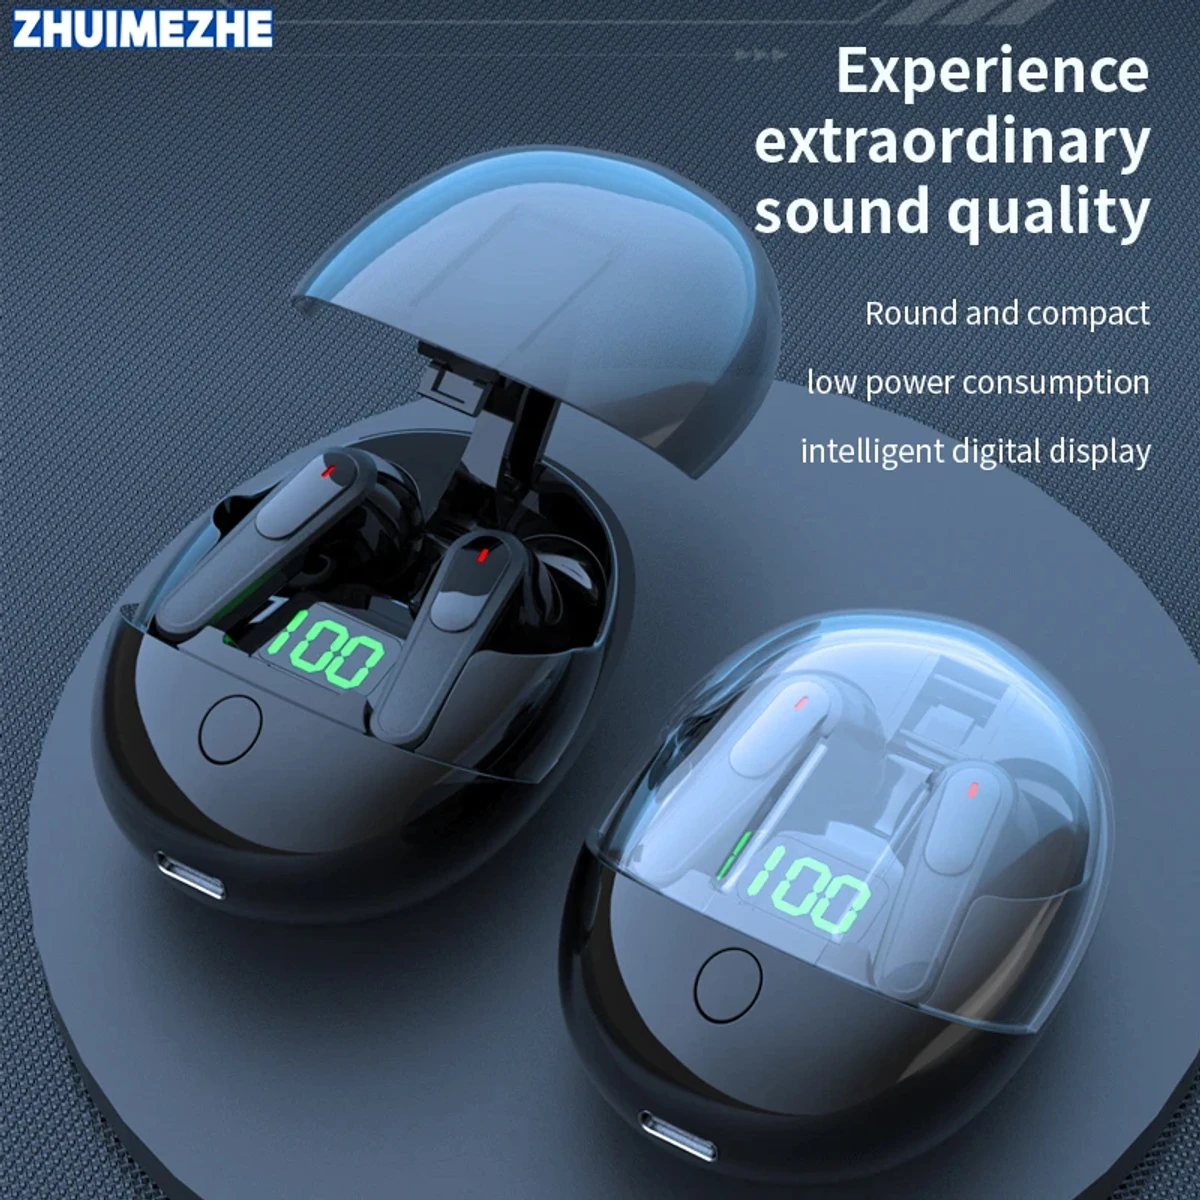 ZHUIMEZHE Pro1 Wireless Headset High Quality Bluetooth Headphone